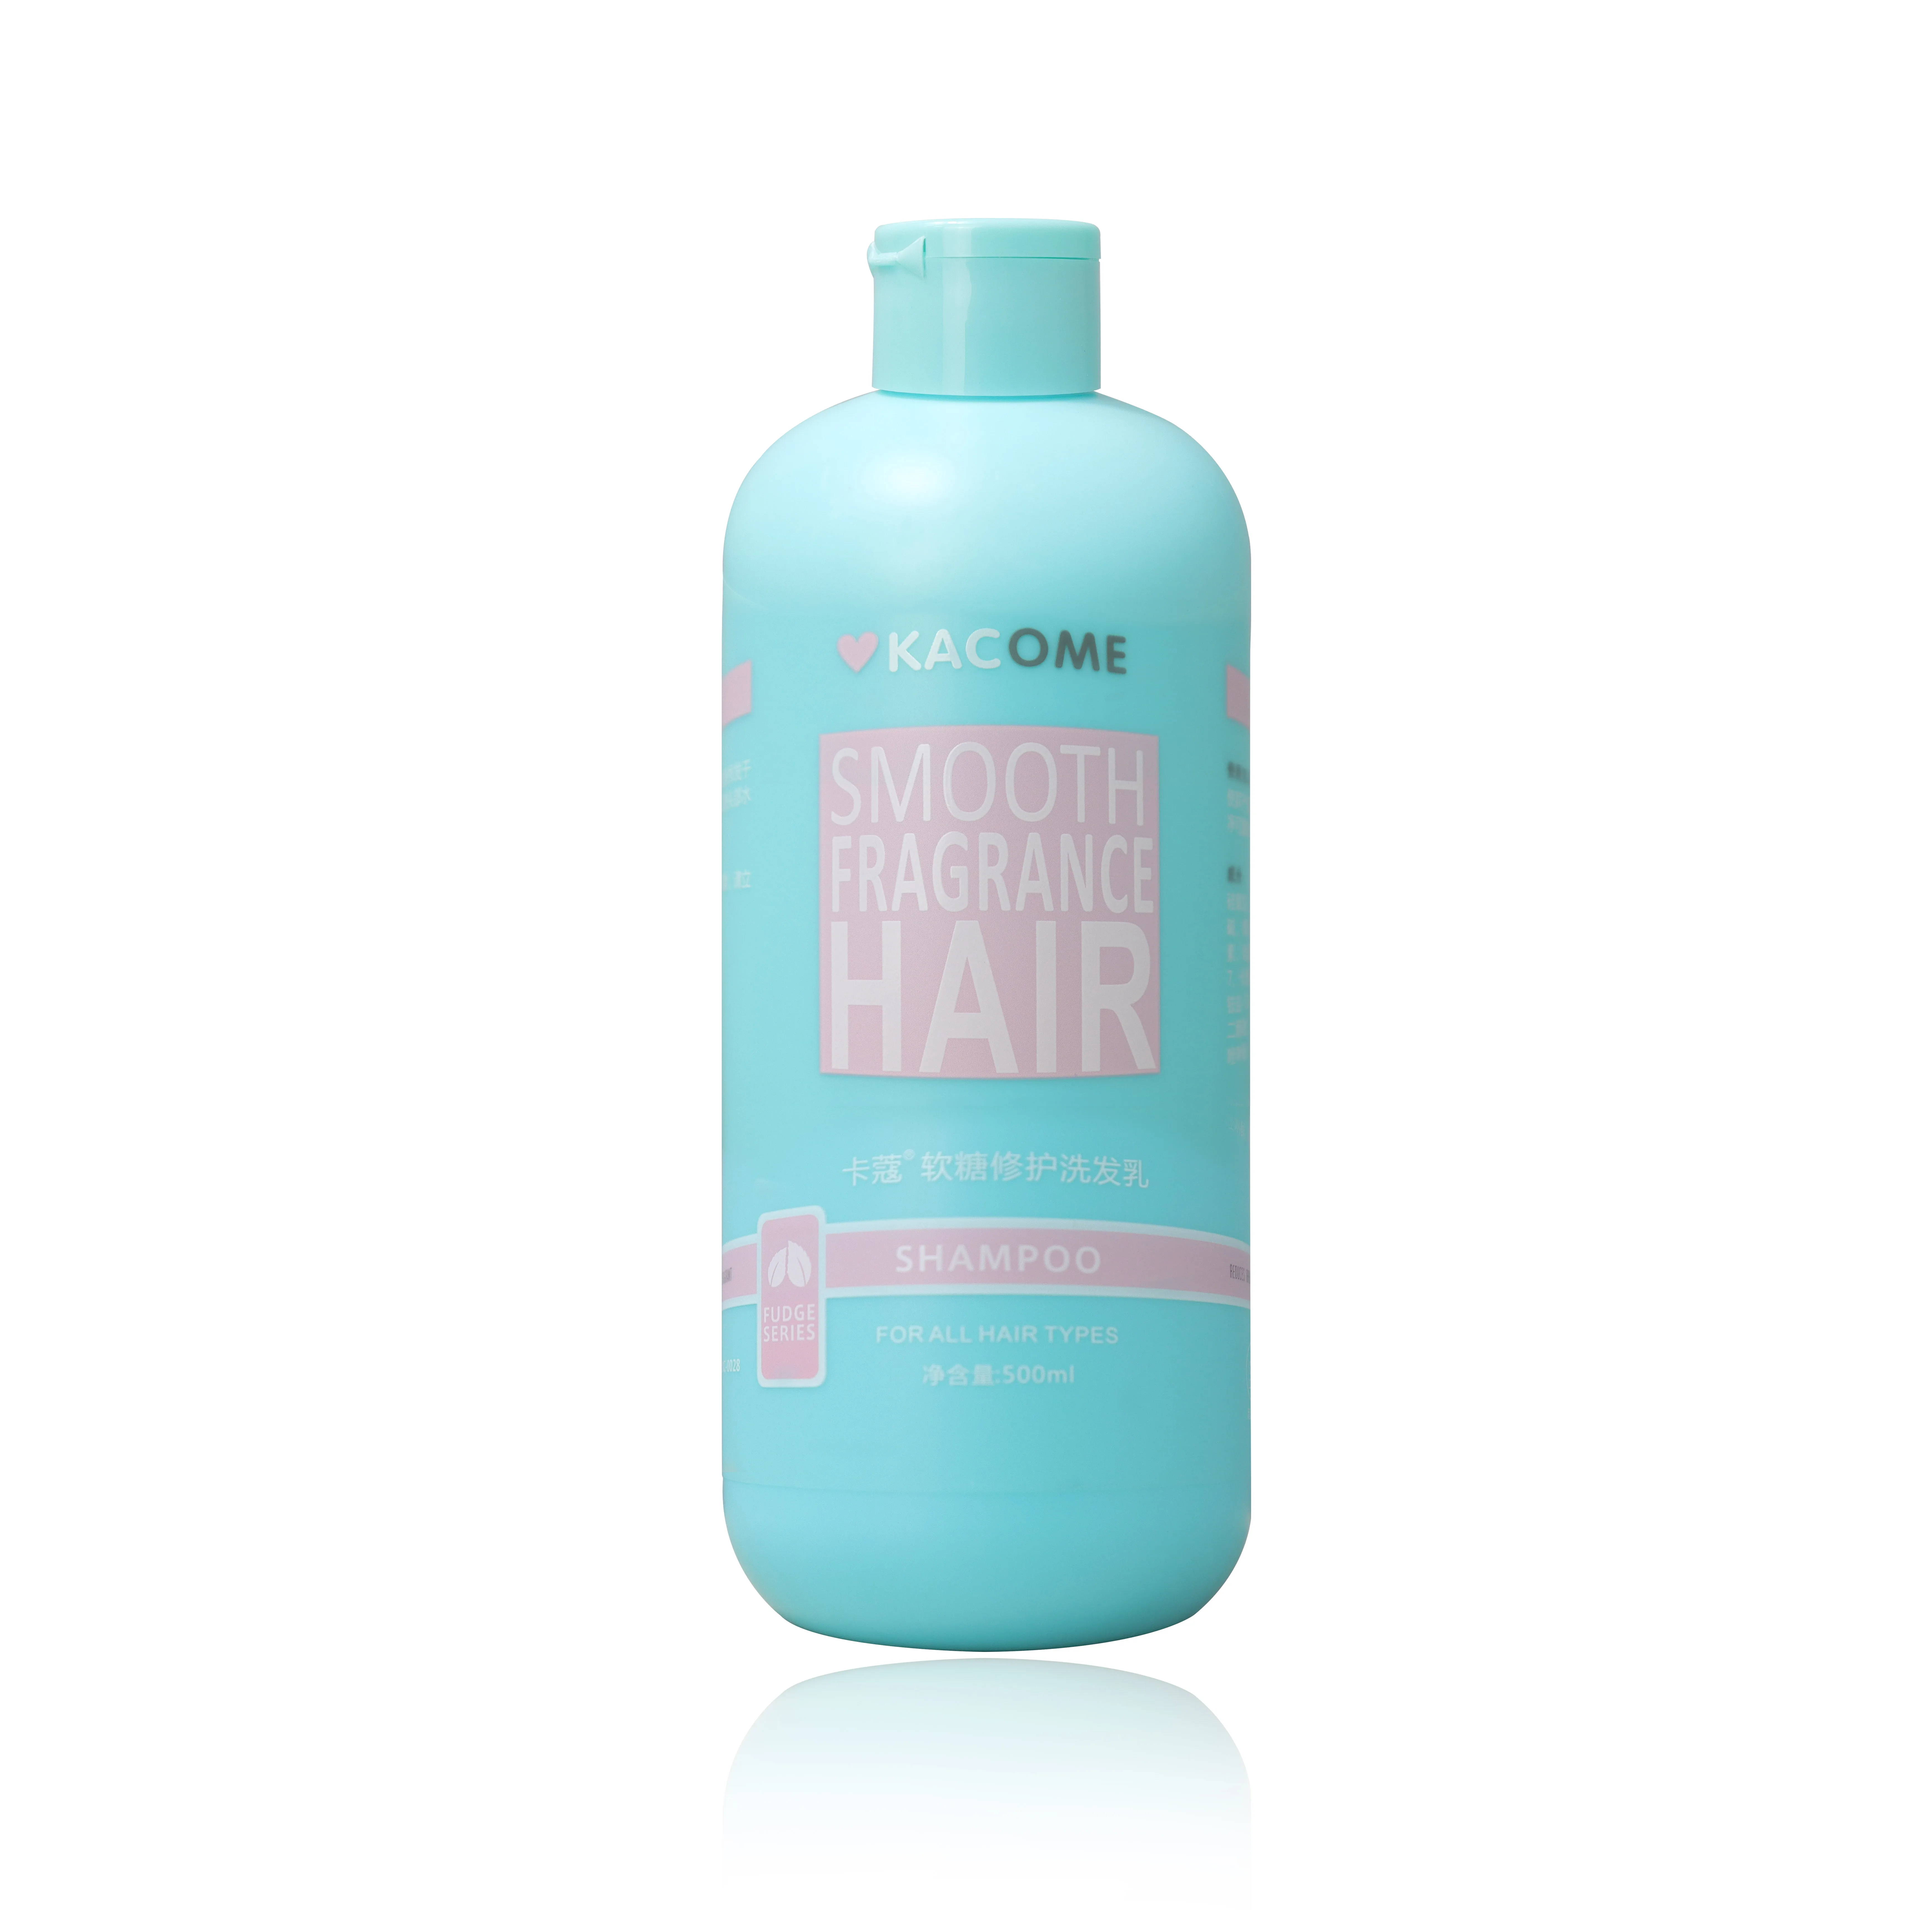 

Wholesale organic natural dandruff shampoo hair care hot sale fragrance long time lasting vitamin E smooth shampoo for hair